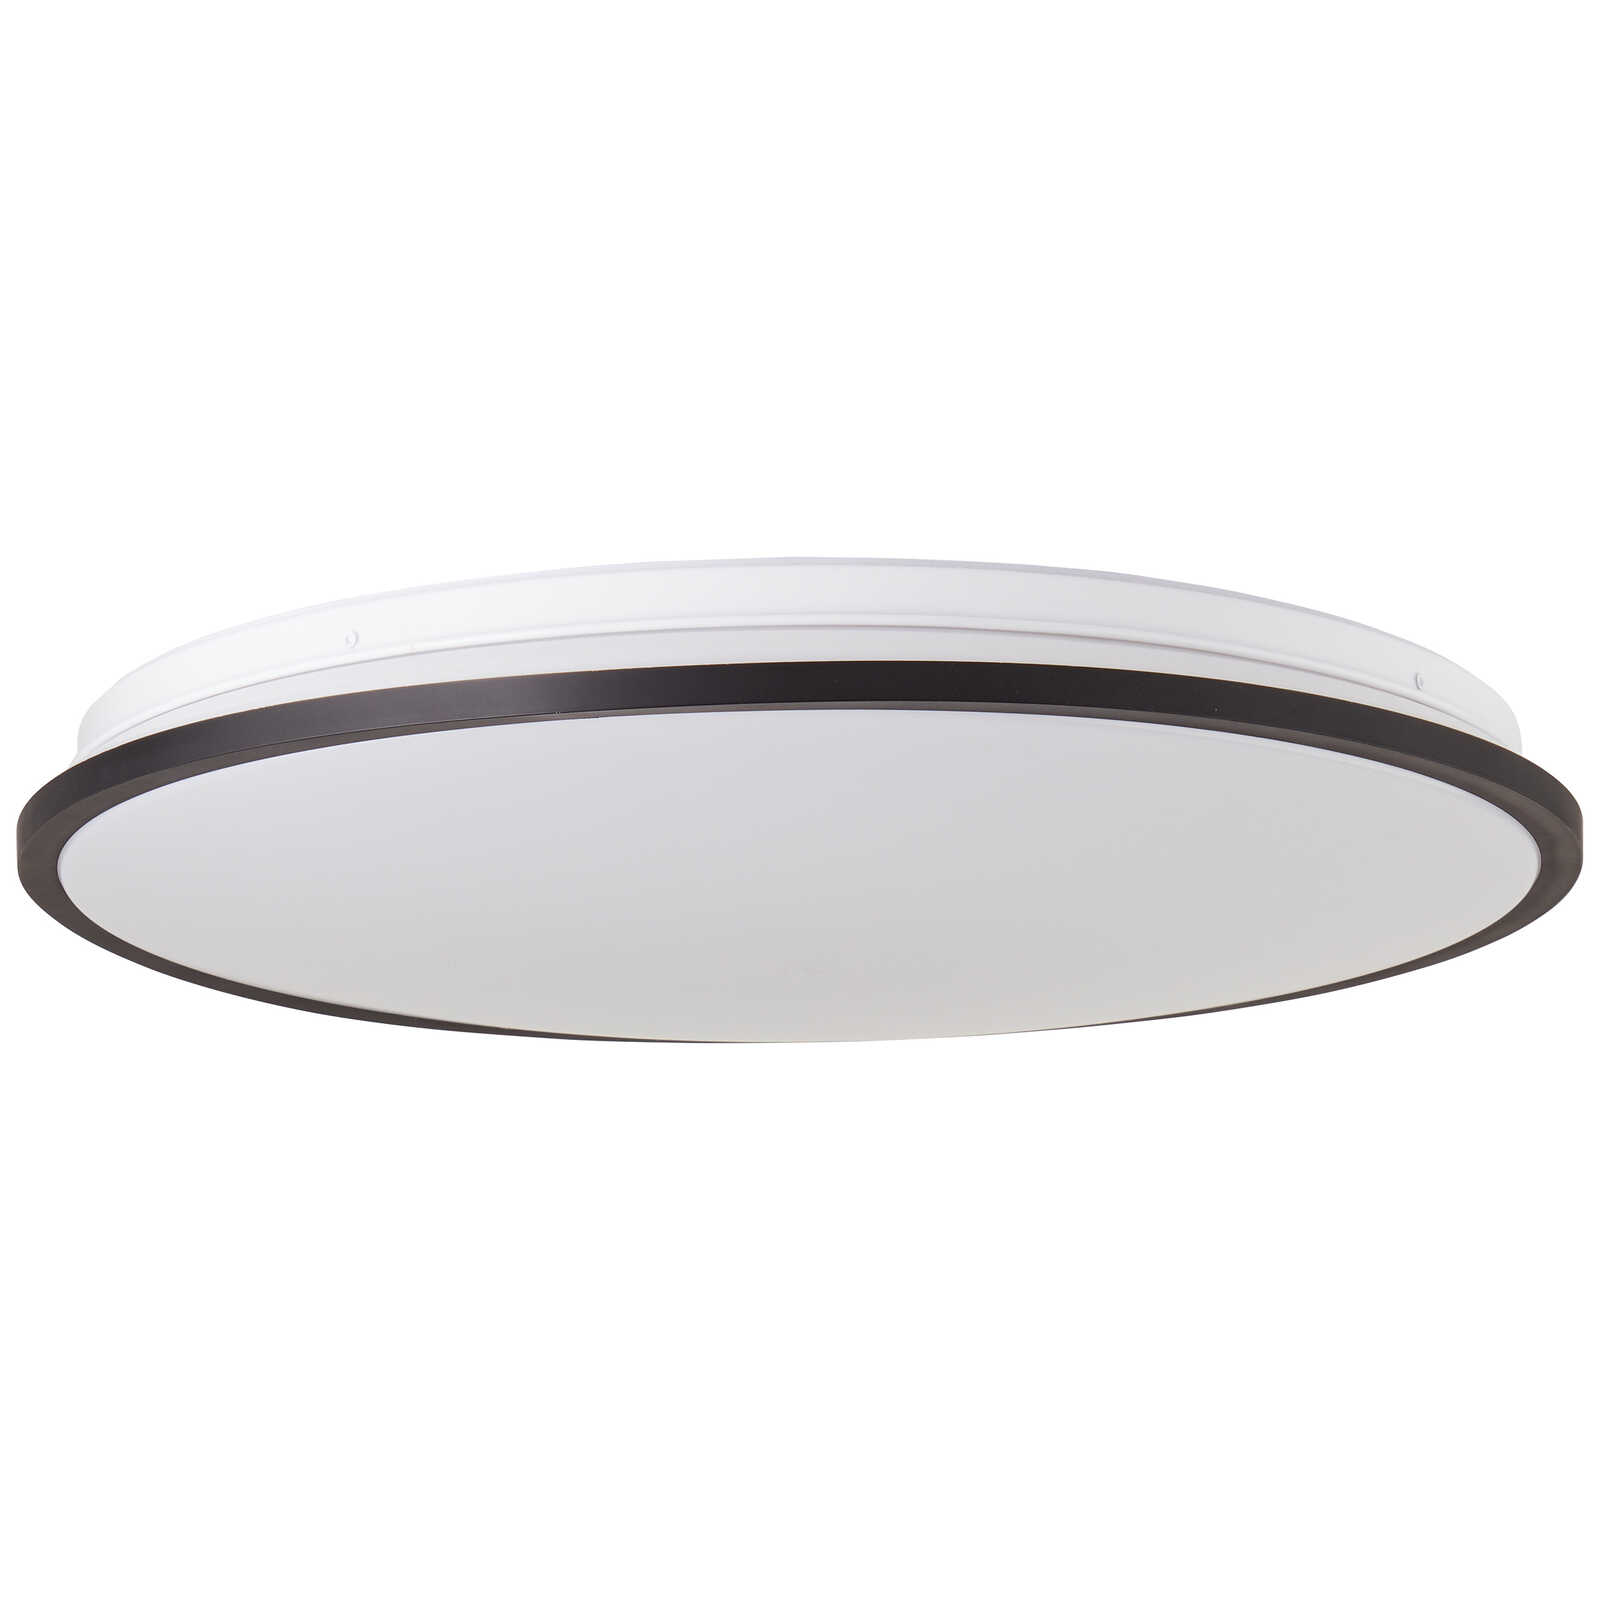             Plastic ceiling light - Iva 2 - Black
        